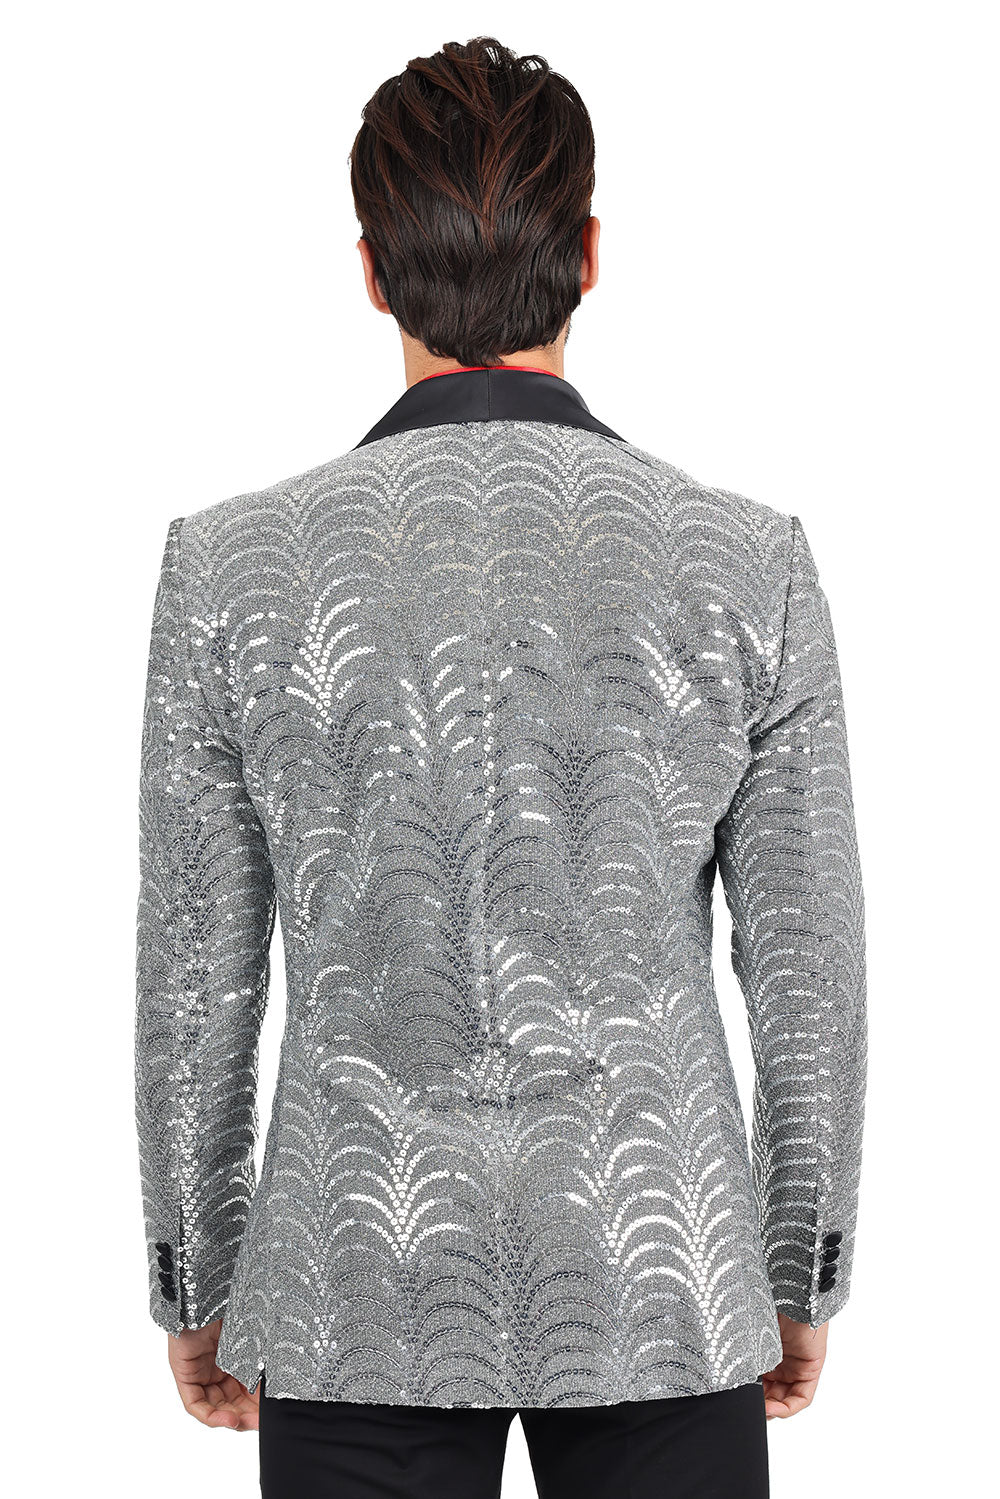 BARABAS Men's High Fashion Sequin Shawl Satin Lapel Blazer 2BLR8 Grey Silver